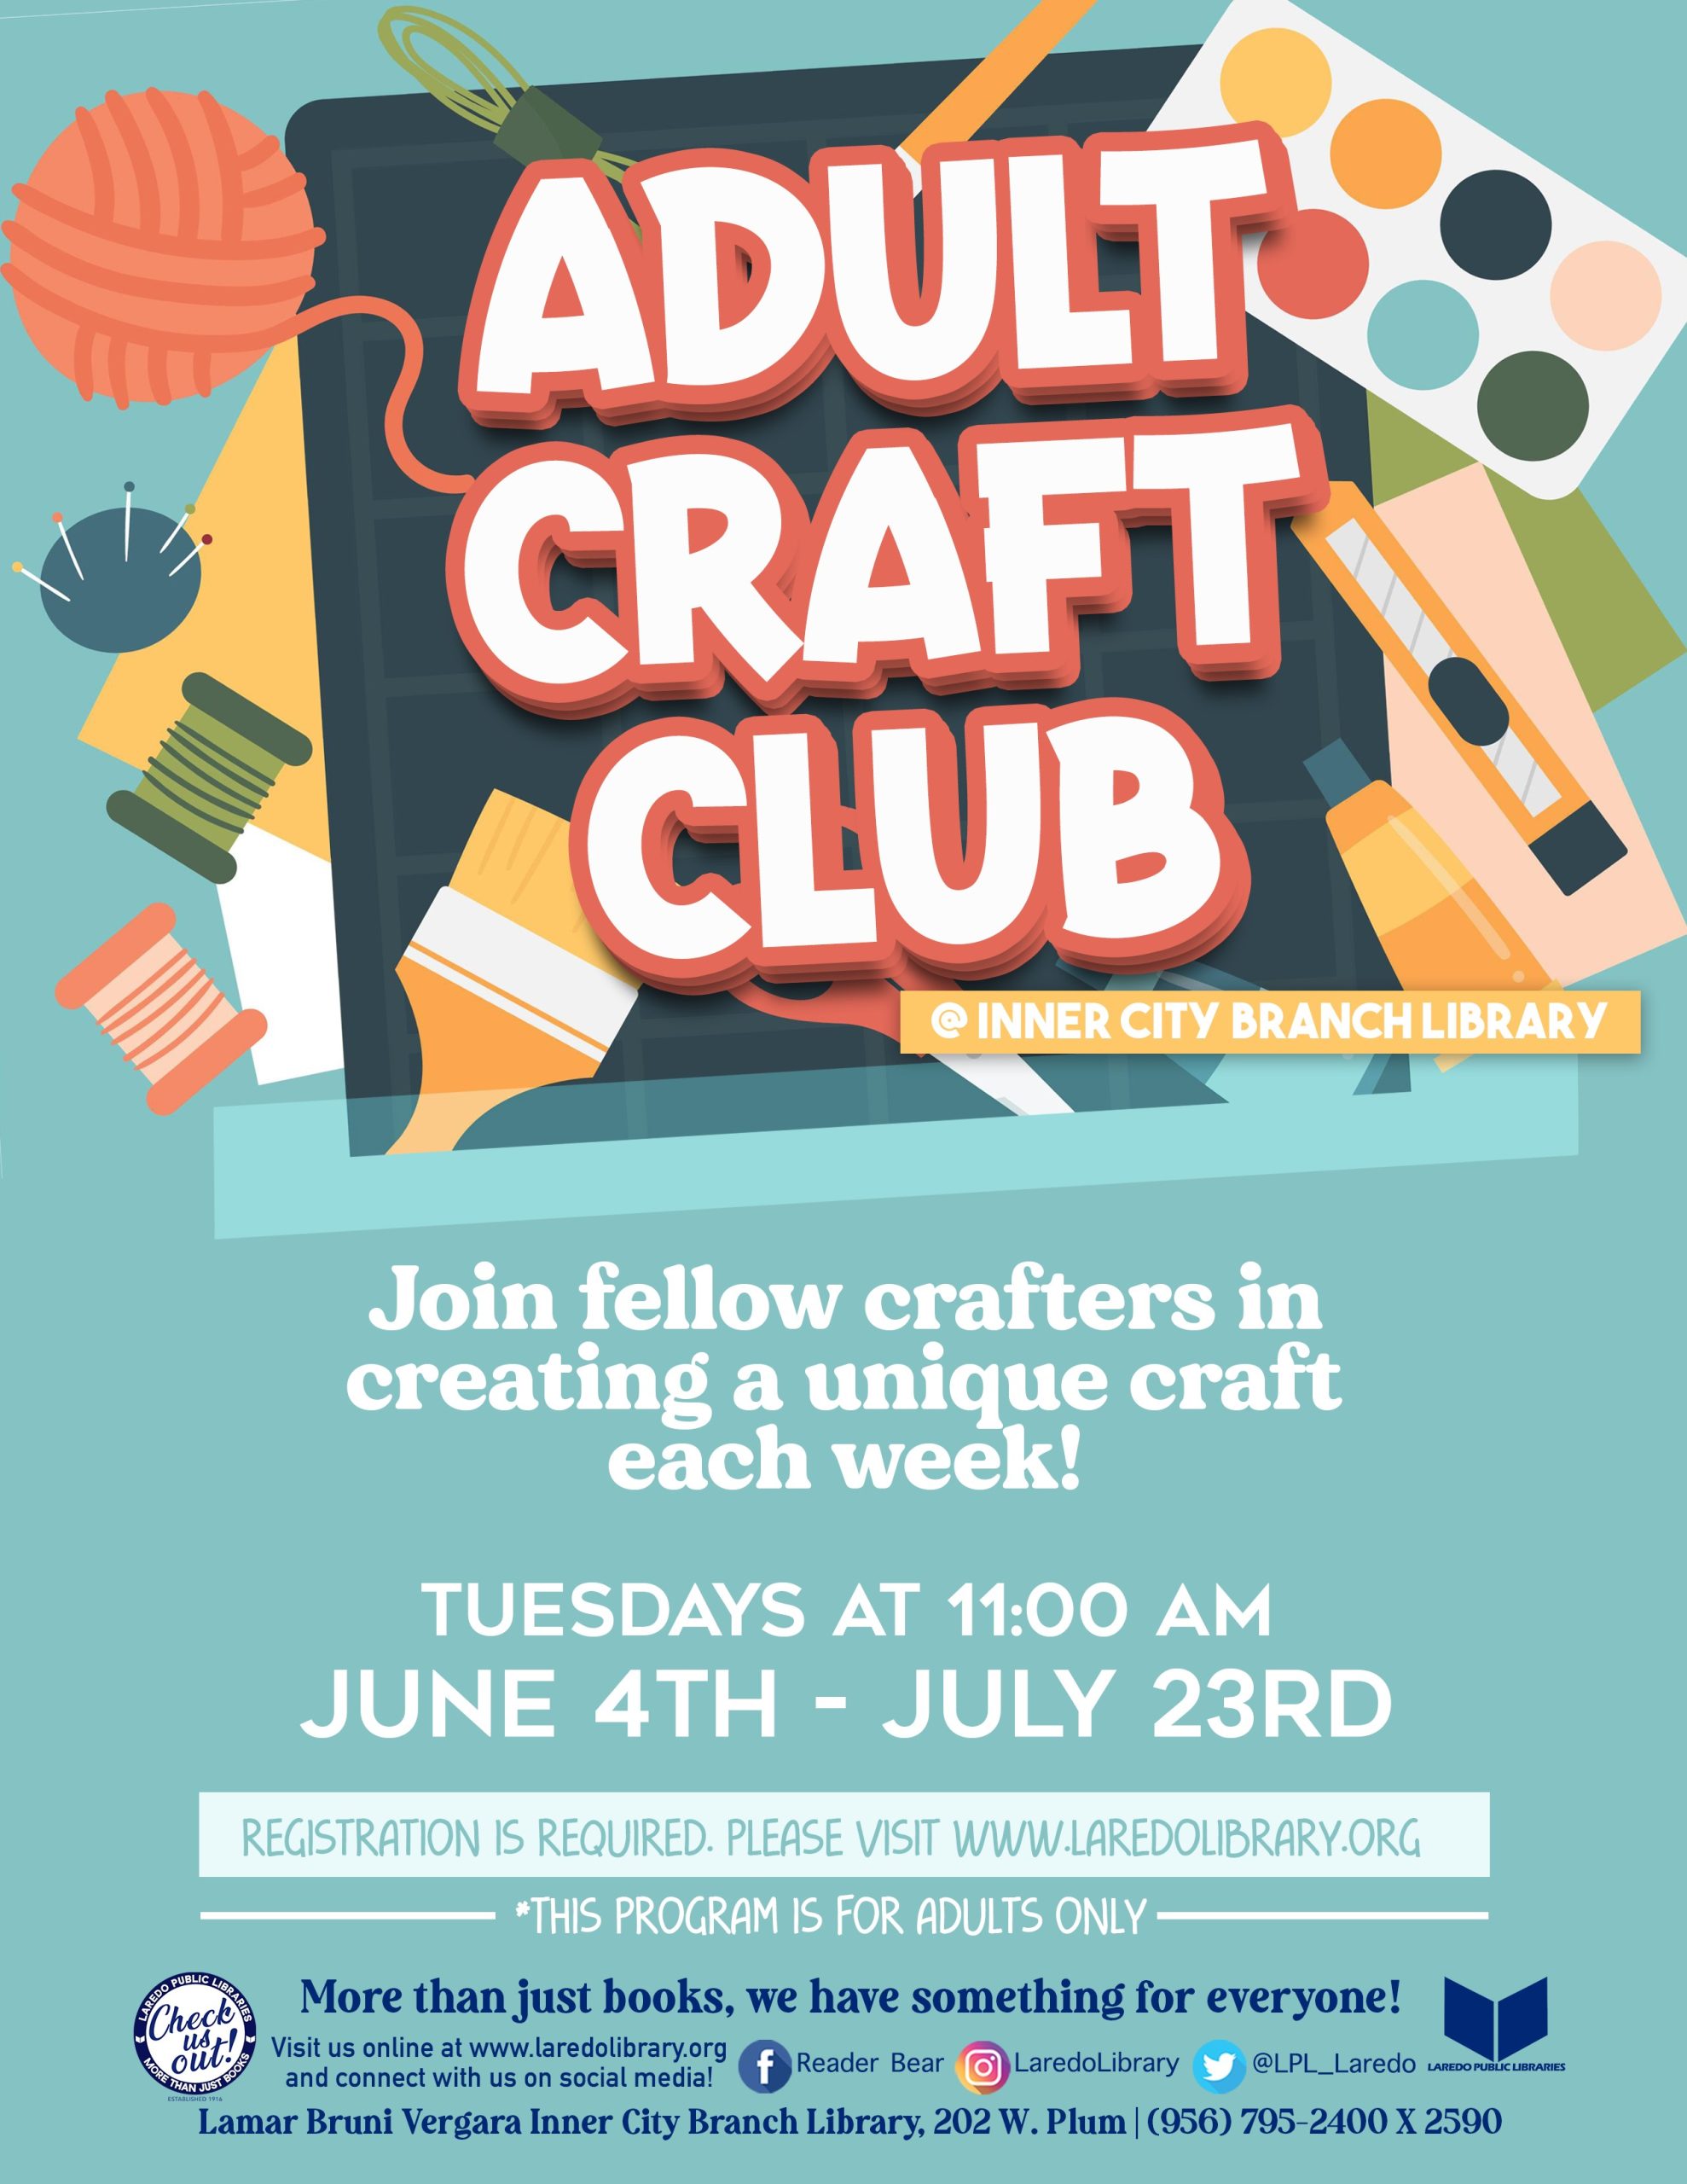 Adult Craft Club Registration Begins!